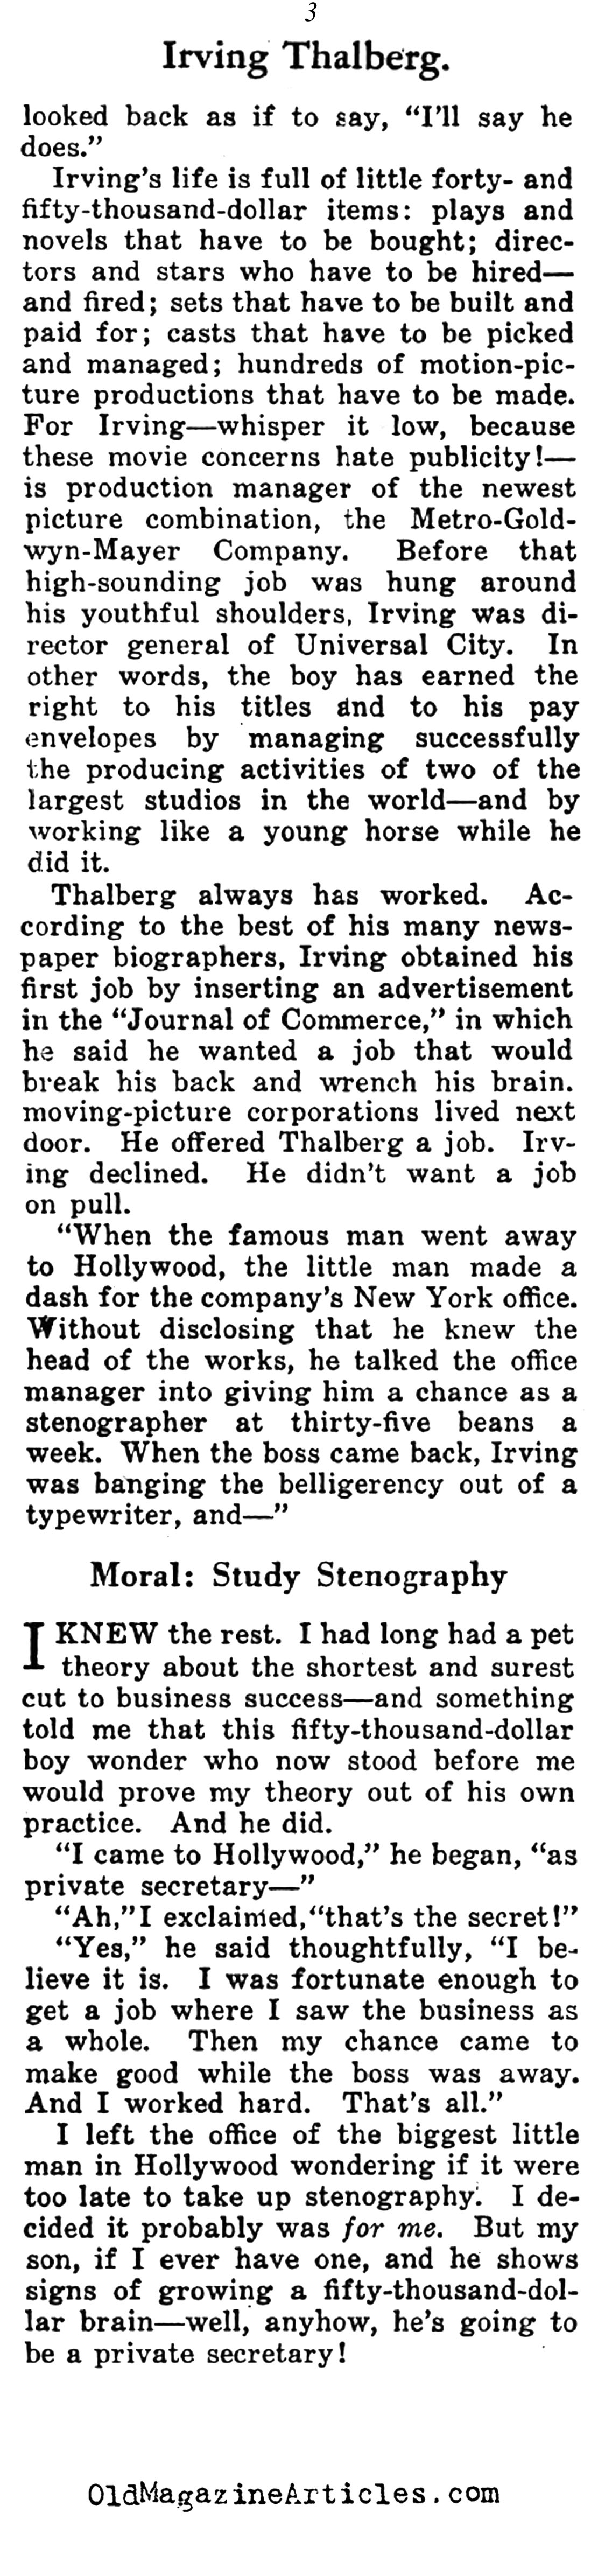 Irving Thalberg: Hollywood's Boy Wonder (Collier's Magazine, 1924)